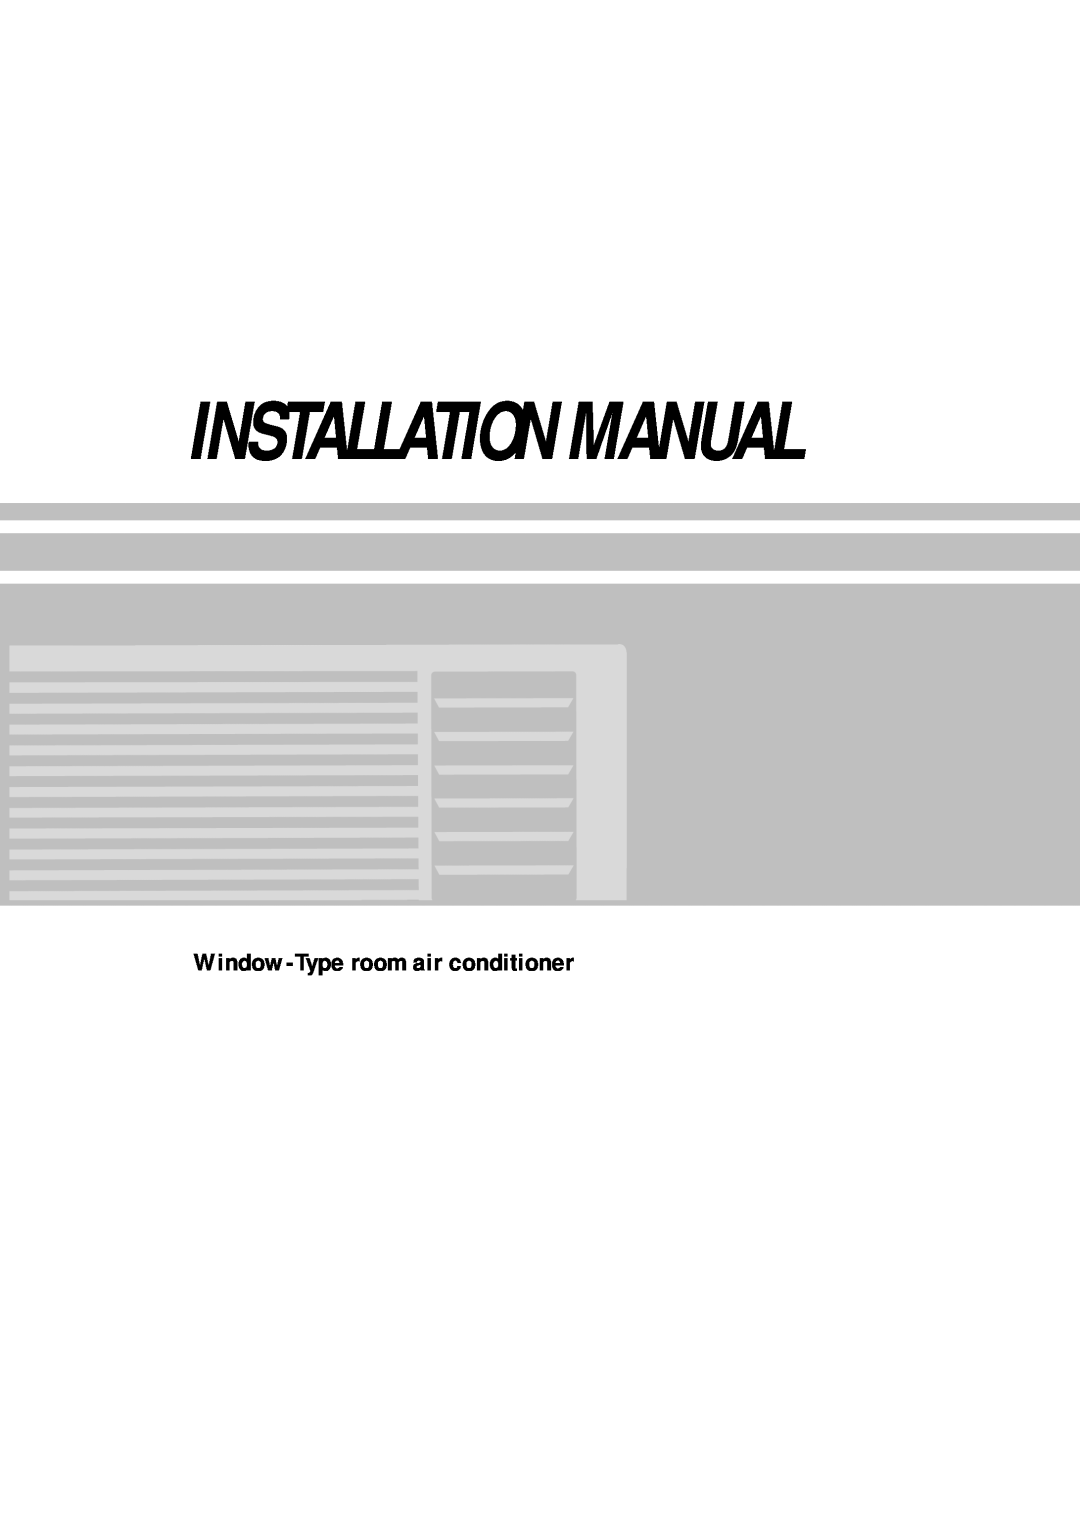 Samsung AW060CM, AW050CM manual Window-Typeroom air conditioner, Installation Manual 